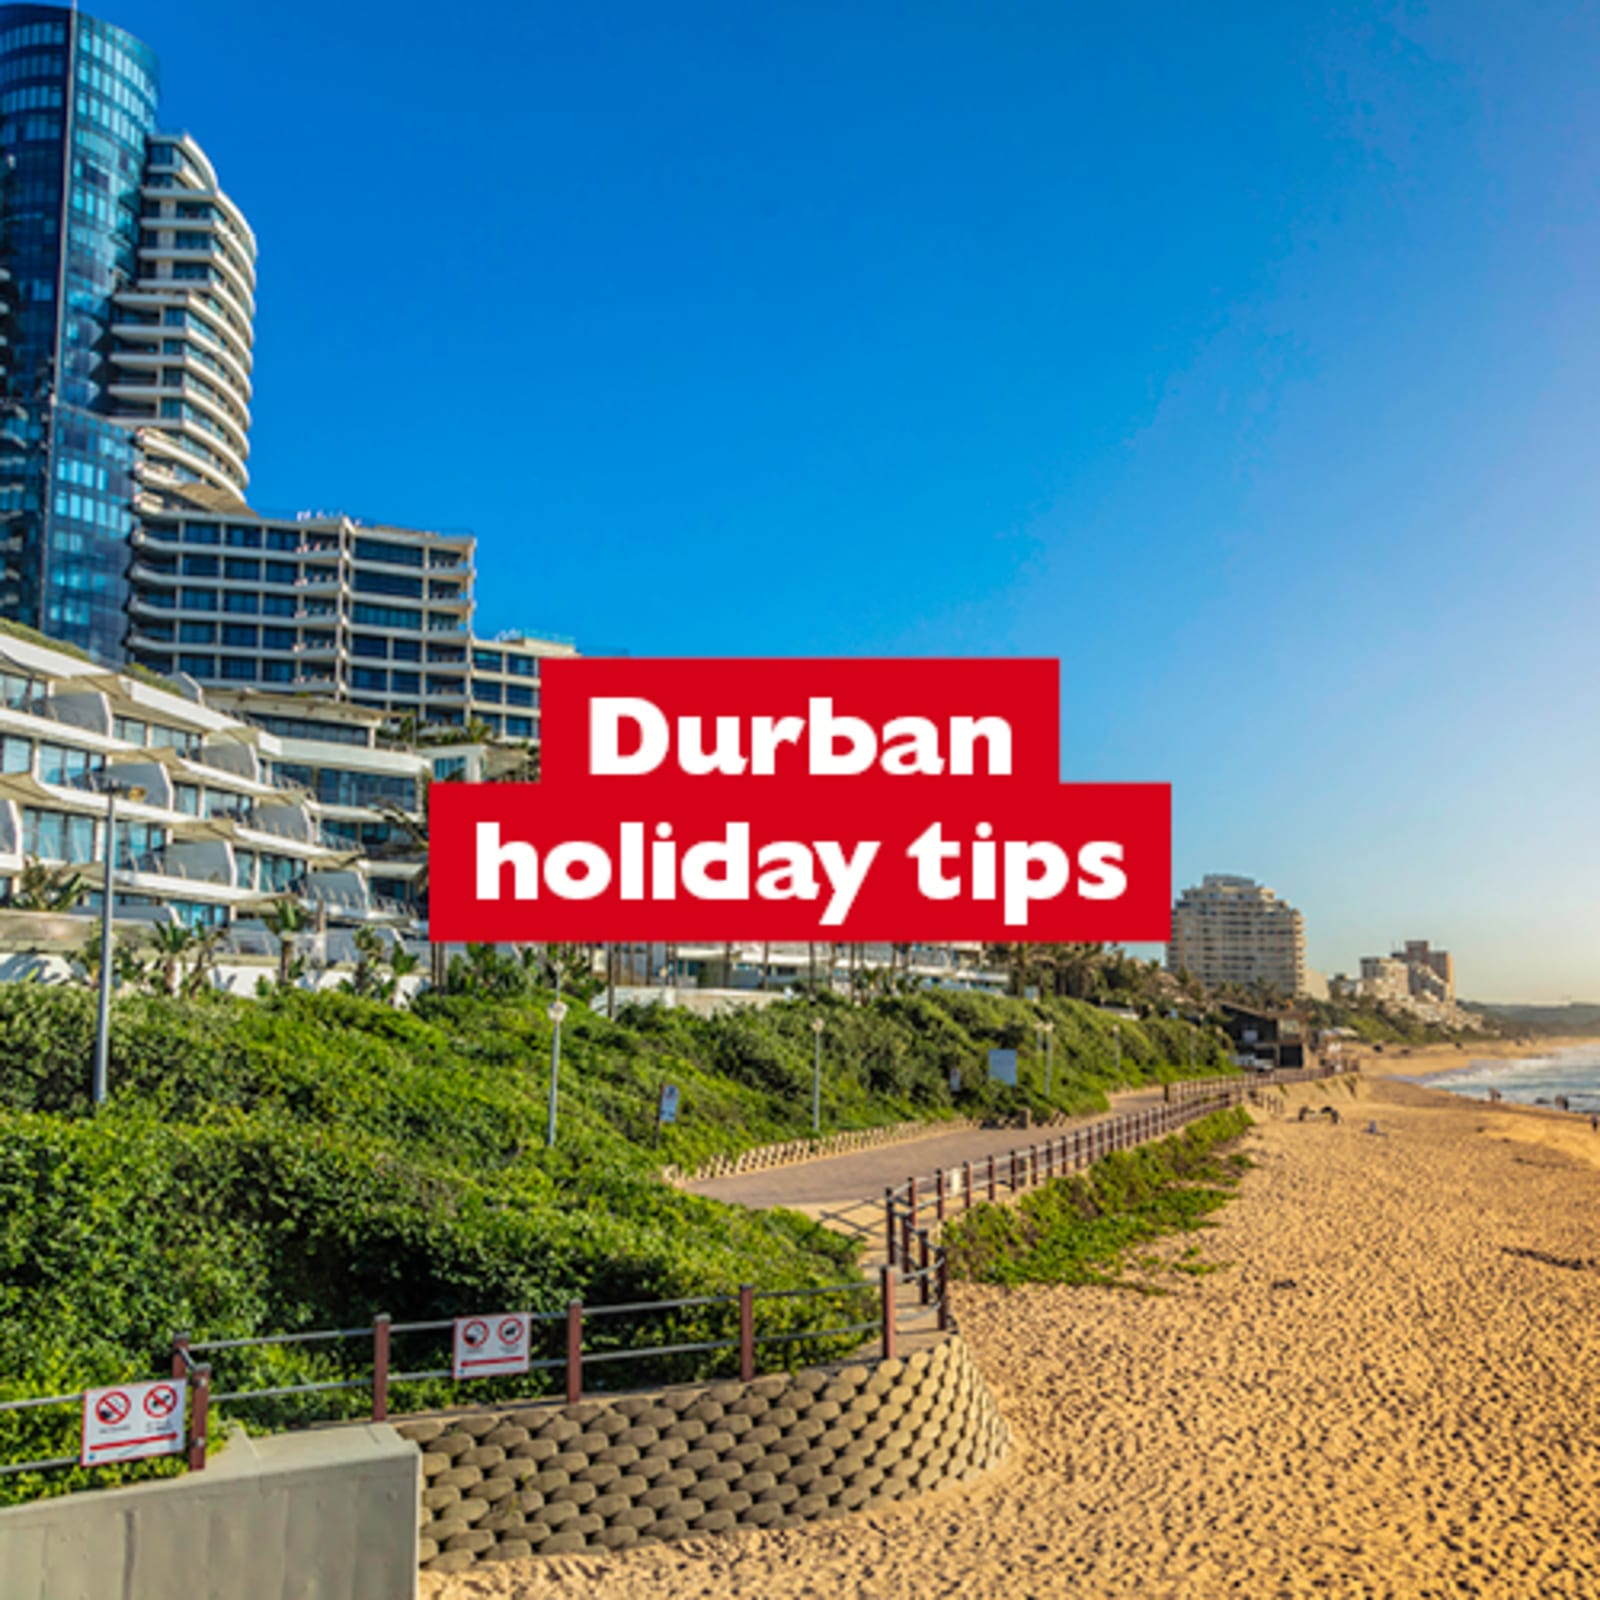 Durban holiday tips